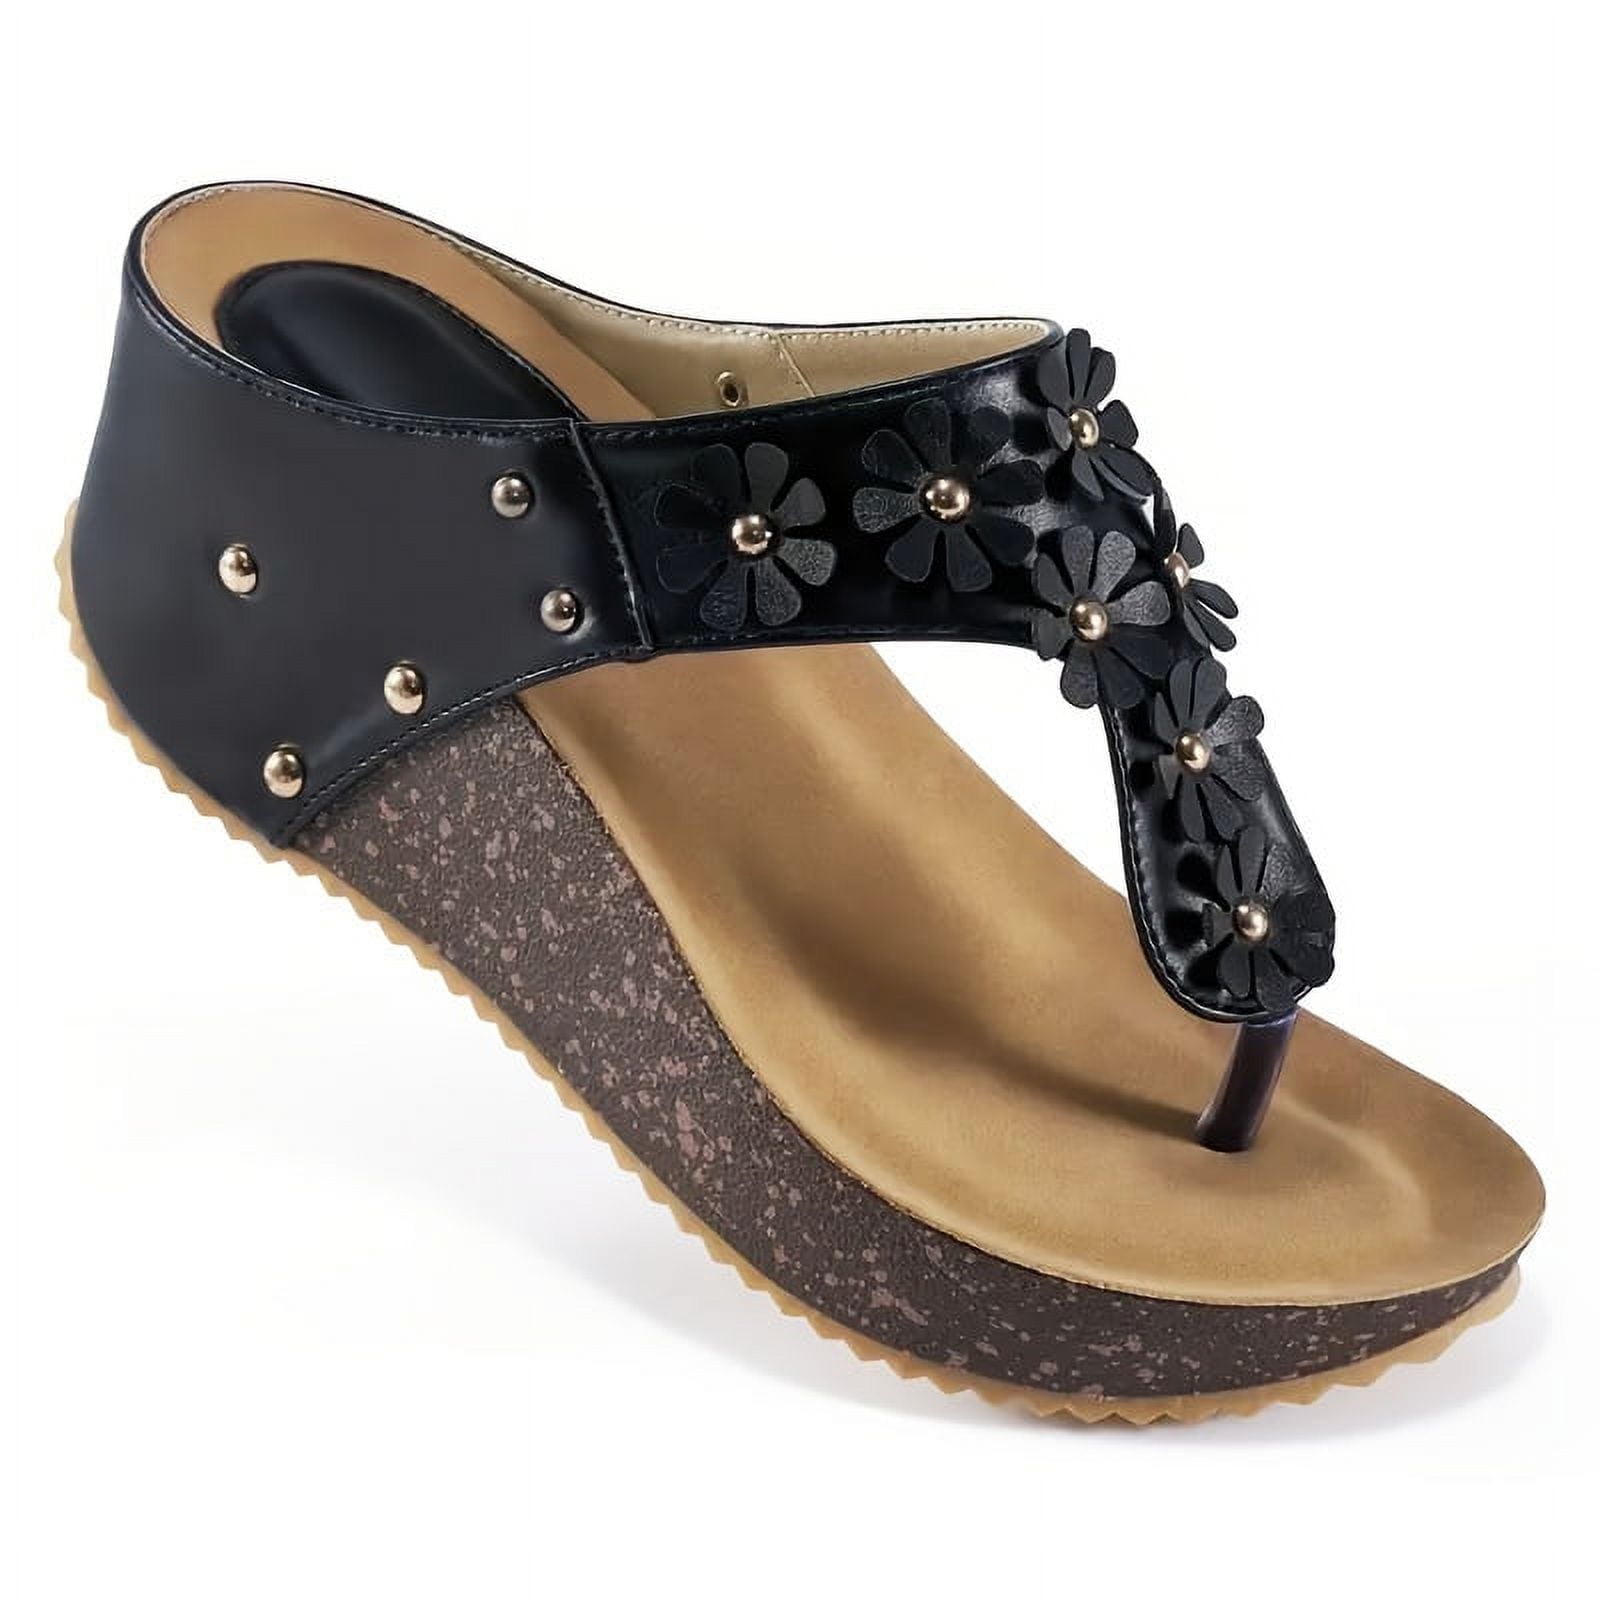 NEW Women's Platform Wedge Thong Sandals - Casual High Heel Cork Flip ...